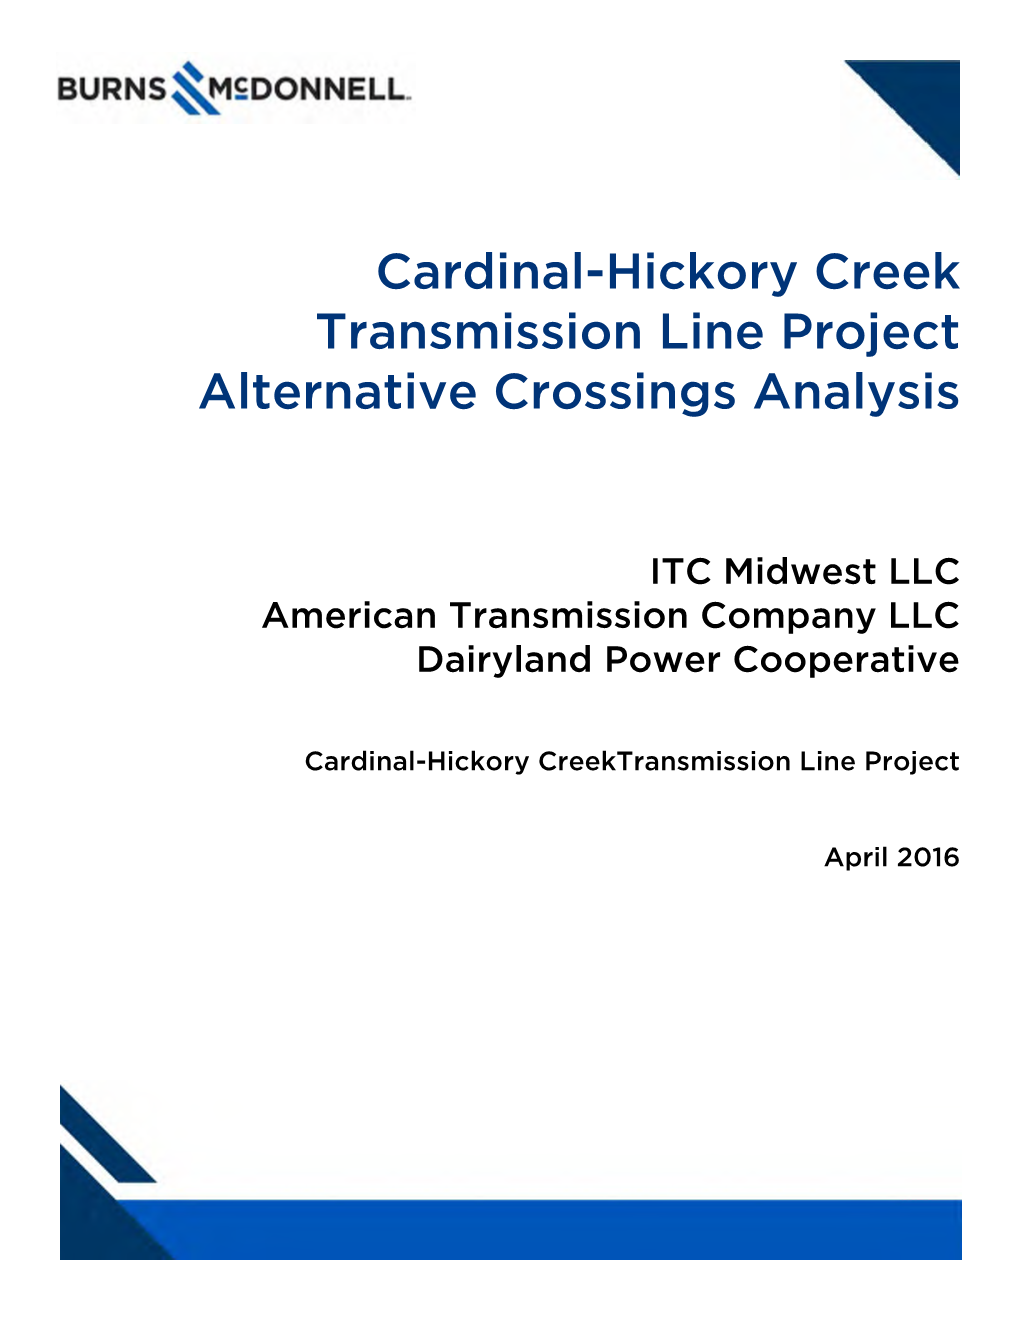 Cardinal-Hickory Creek Transmission Line Project Alternative Crossings Analysis